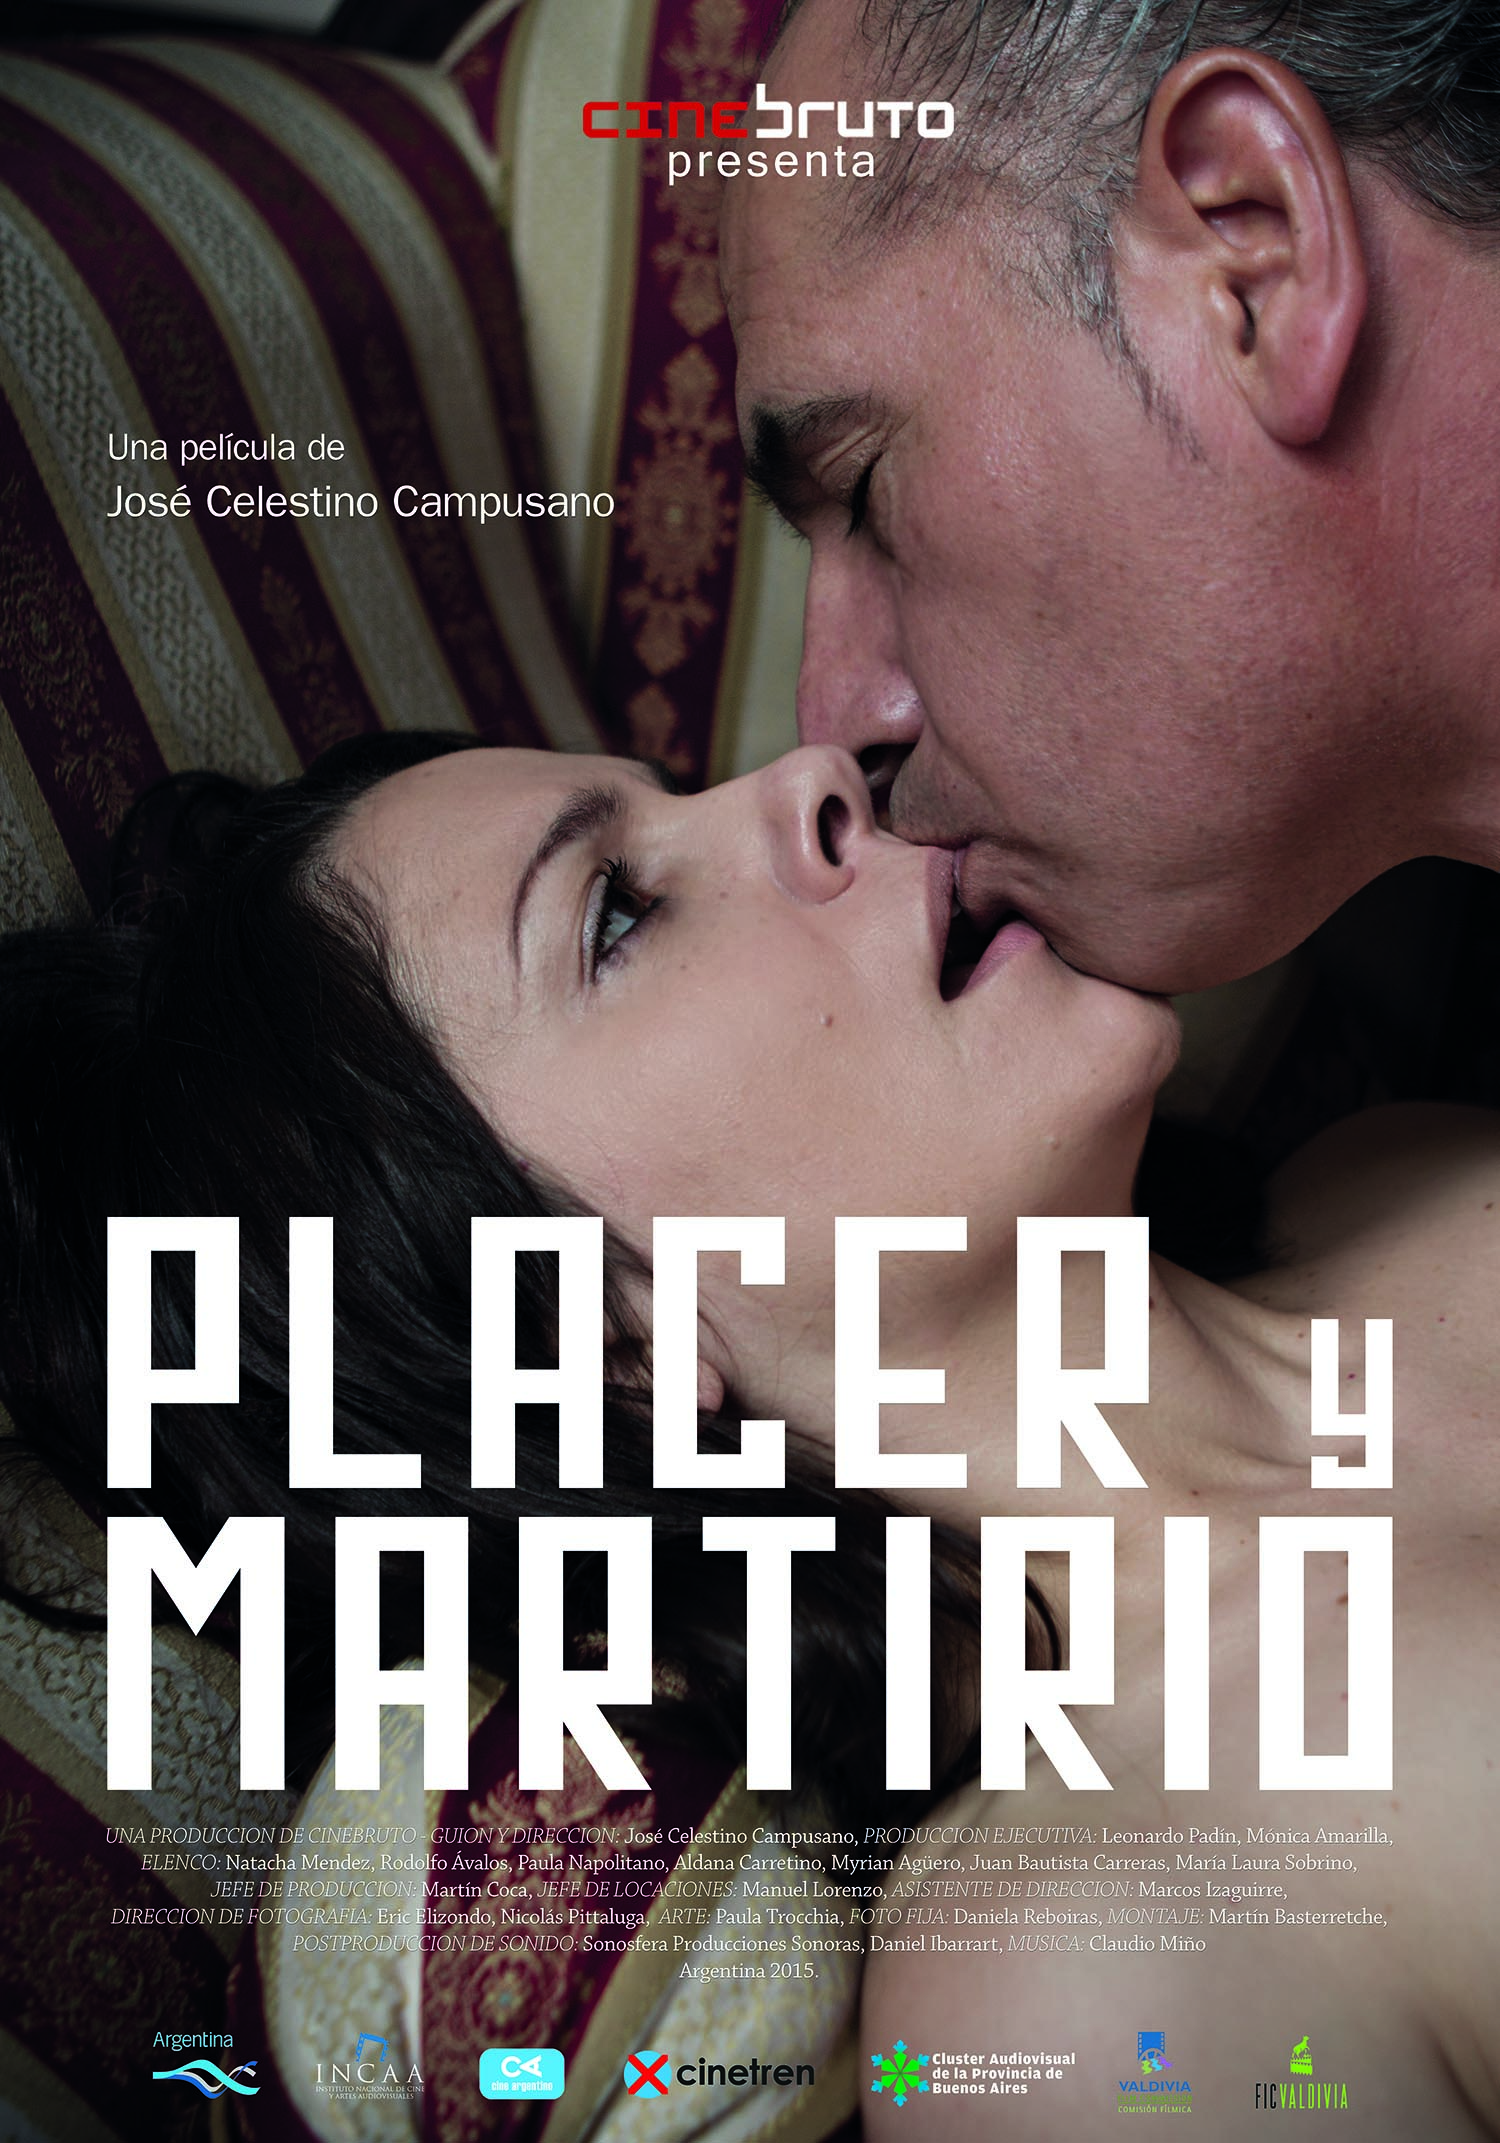 Placer y martirio (2015) Screenshot 1